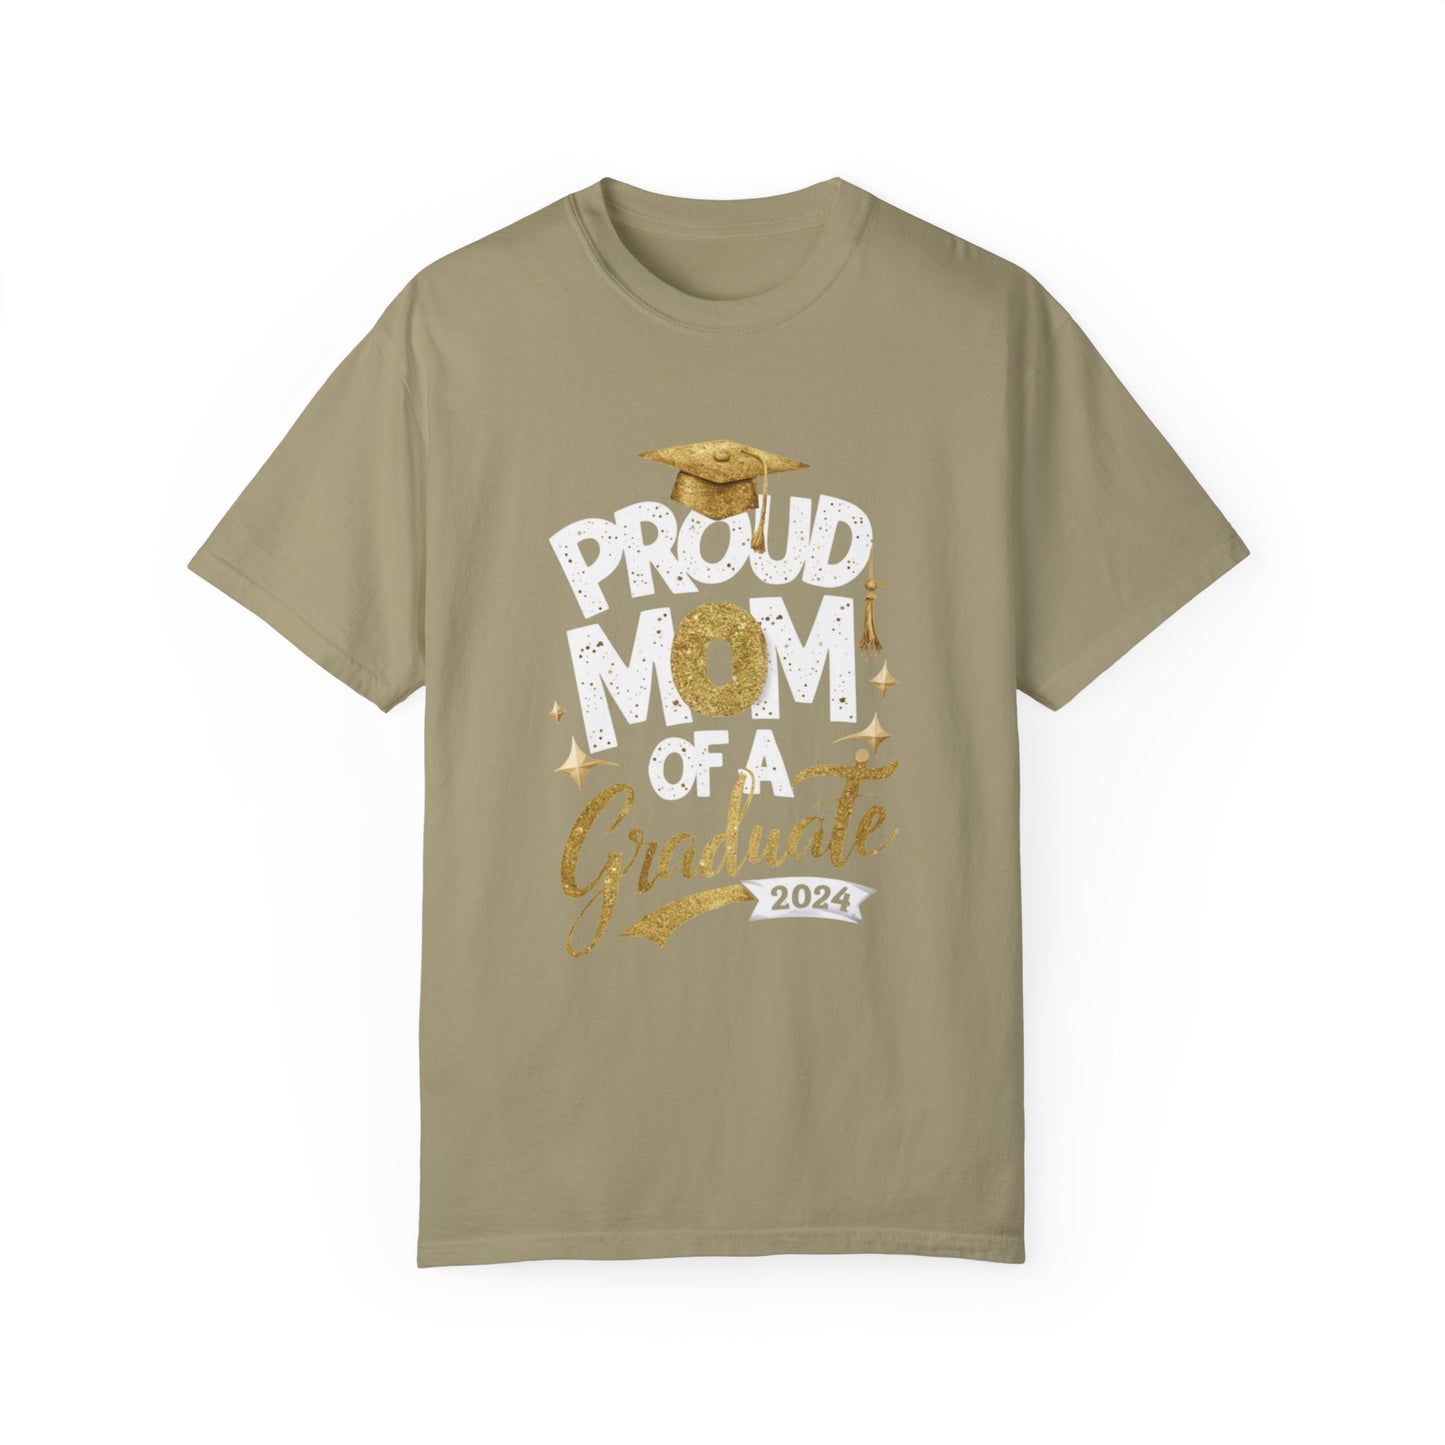 Proud Mom of a 2024 Graduate Unisex Garment-dyed T-shirt Cotton Funny Humorous Graphic Soft Premium Unisex Men Women Khaki T-shirt Birthday Gift-11